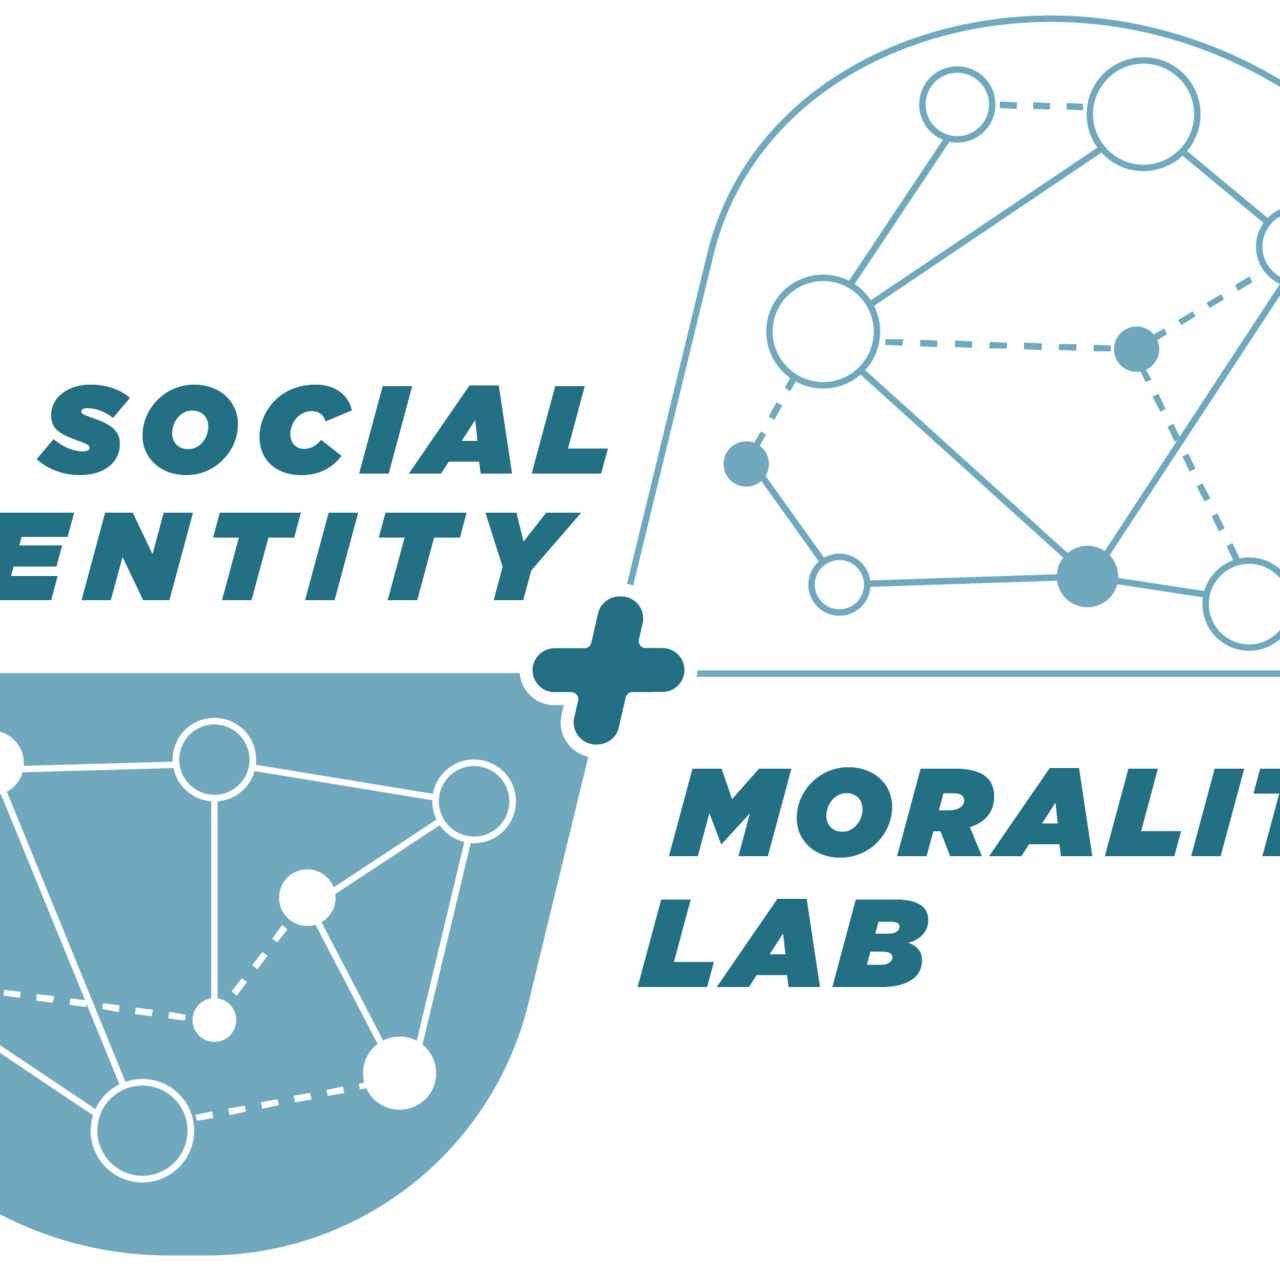 The Social Identity & Morality Lab | New York University